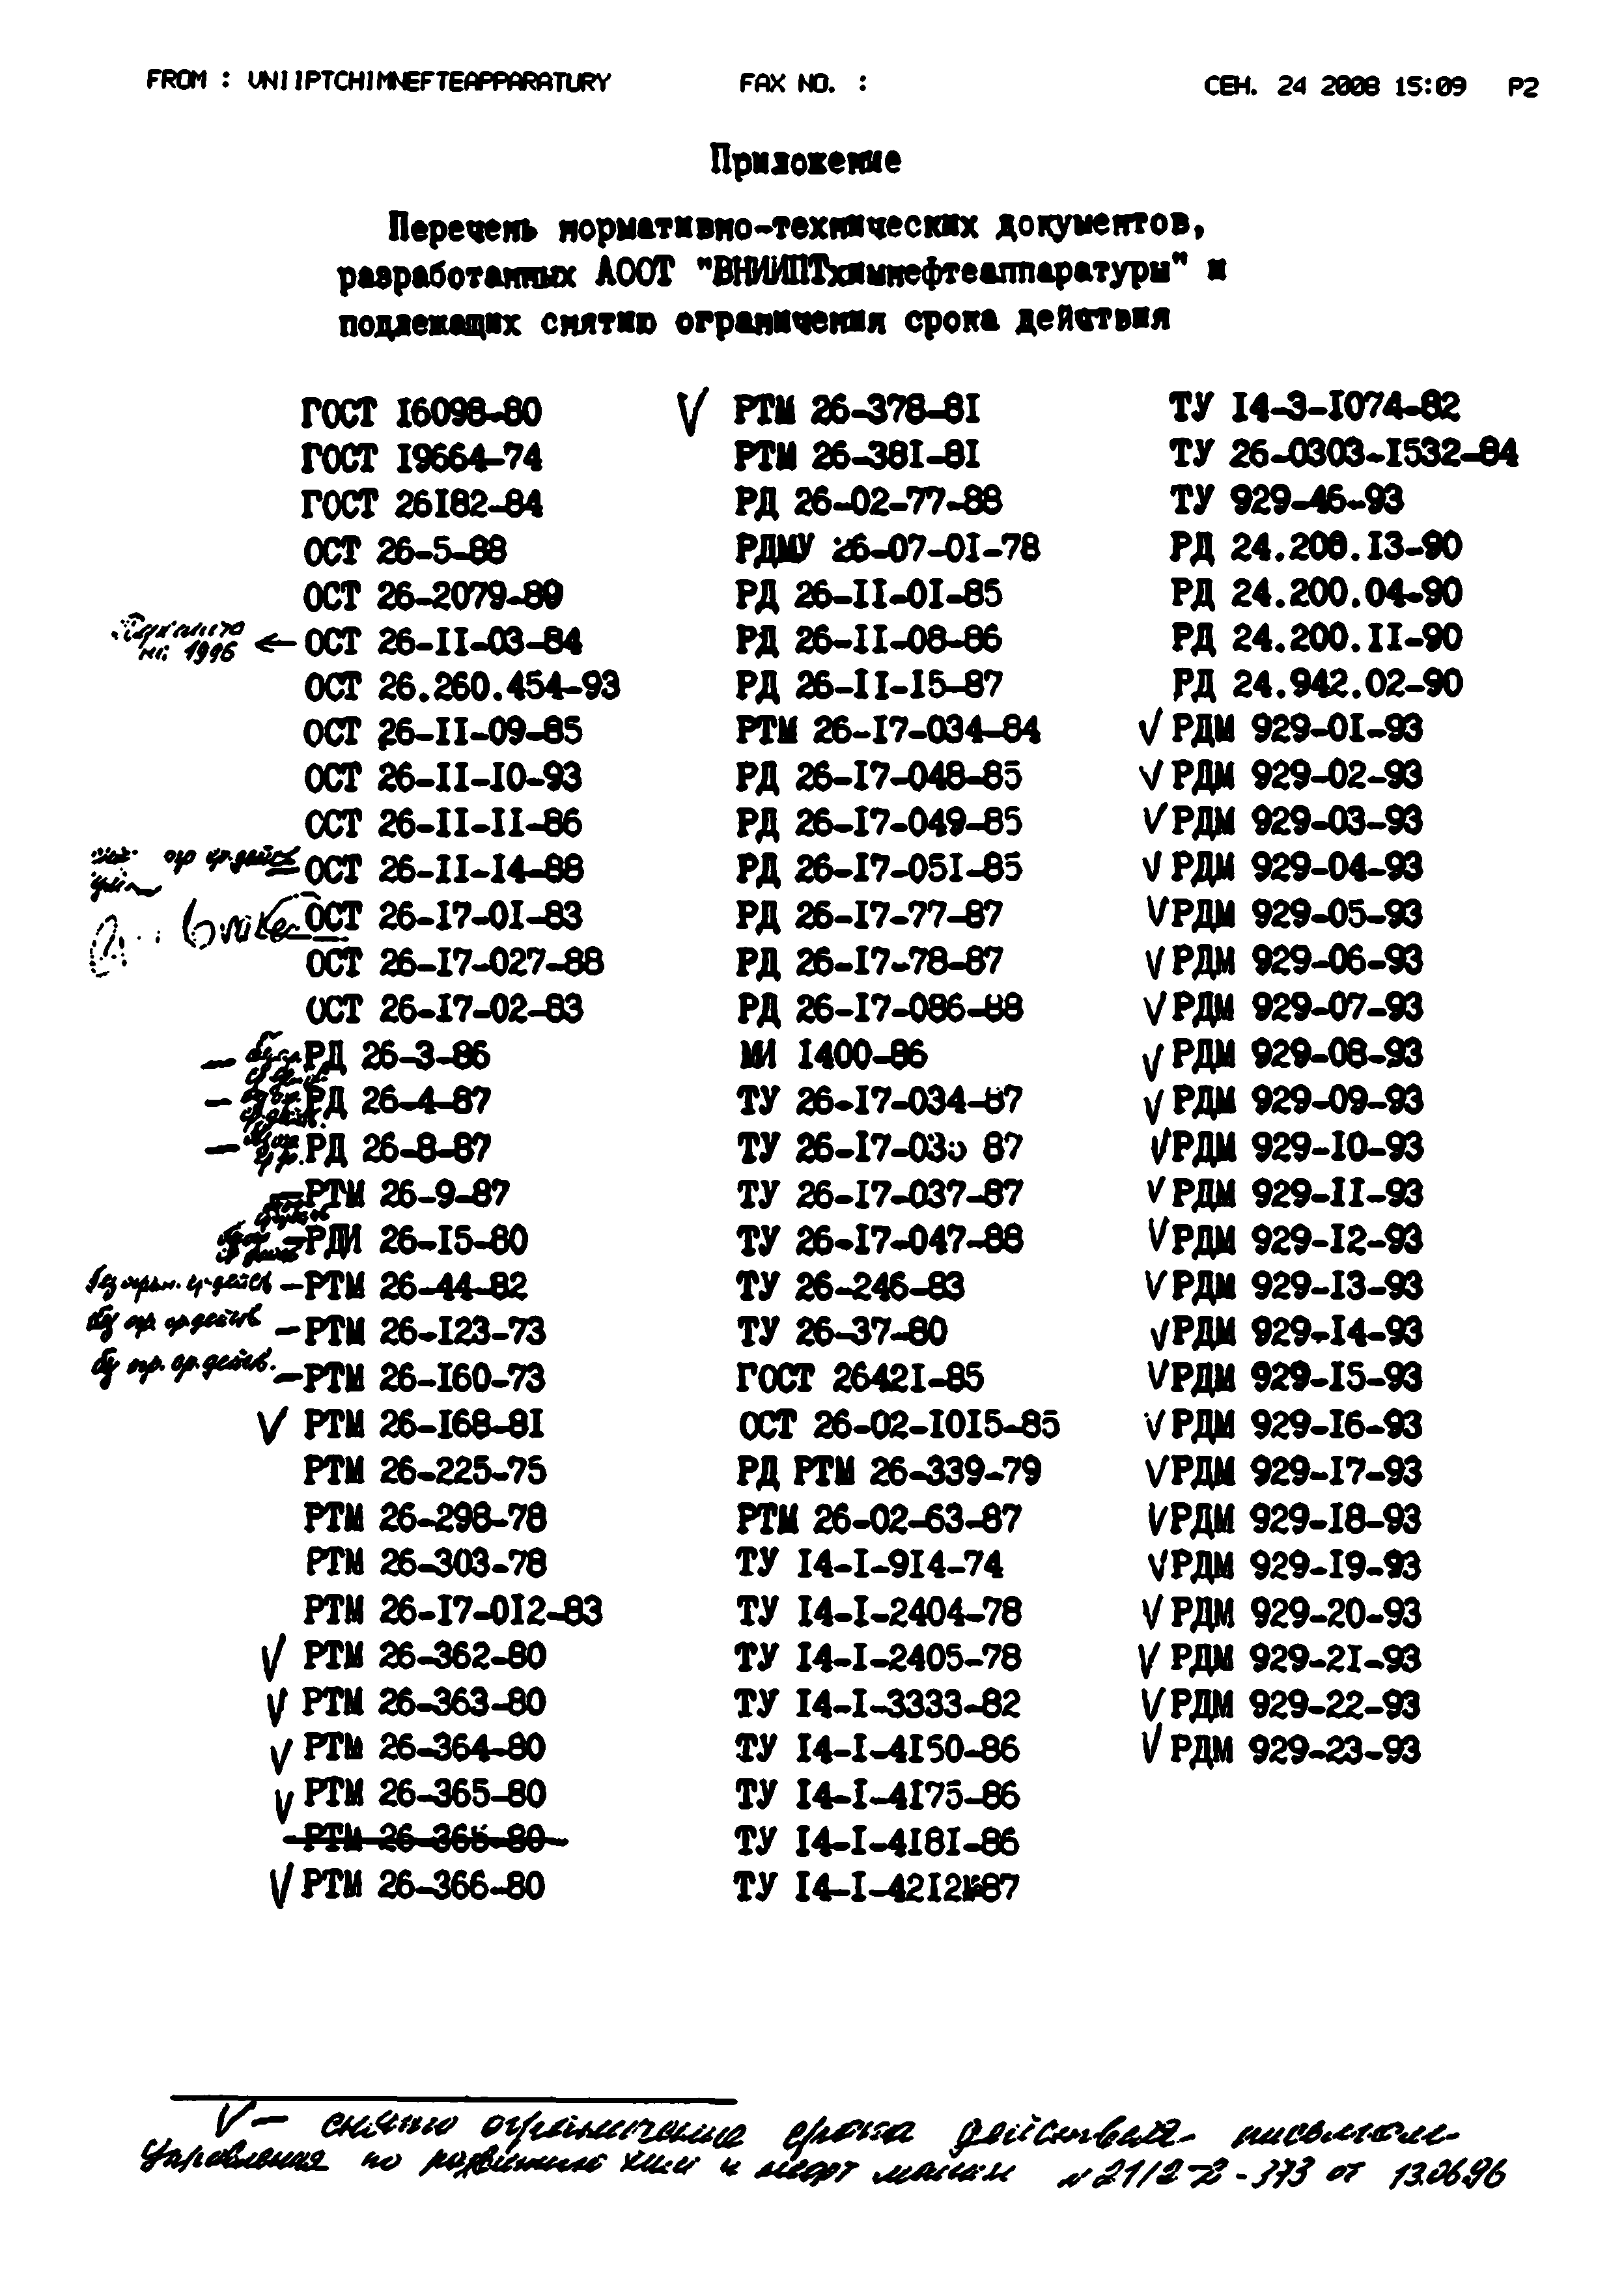 РДМ 929-11-93